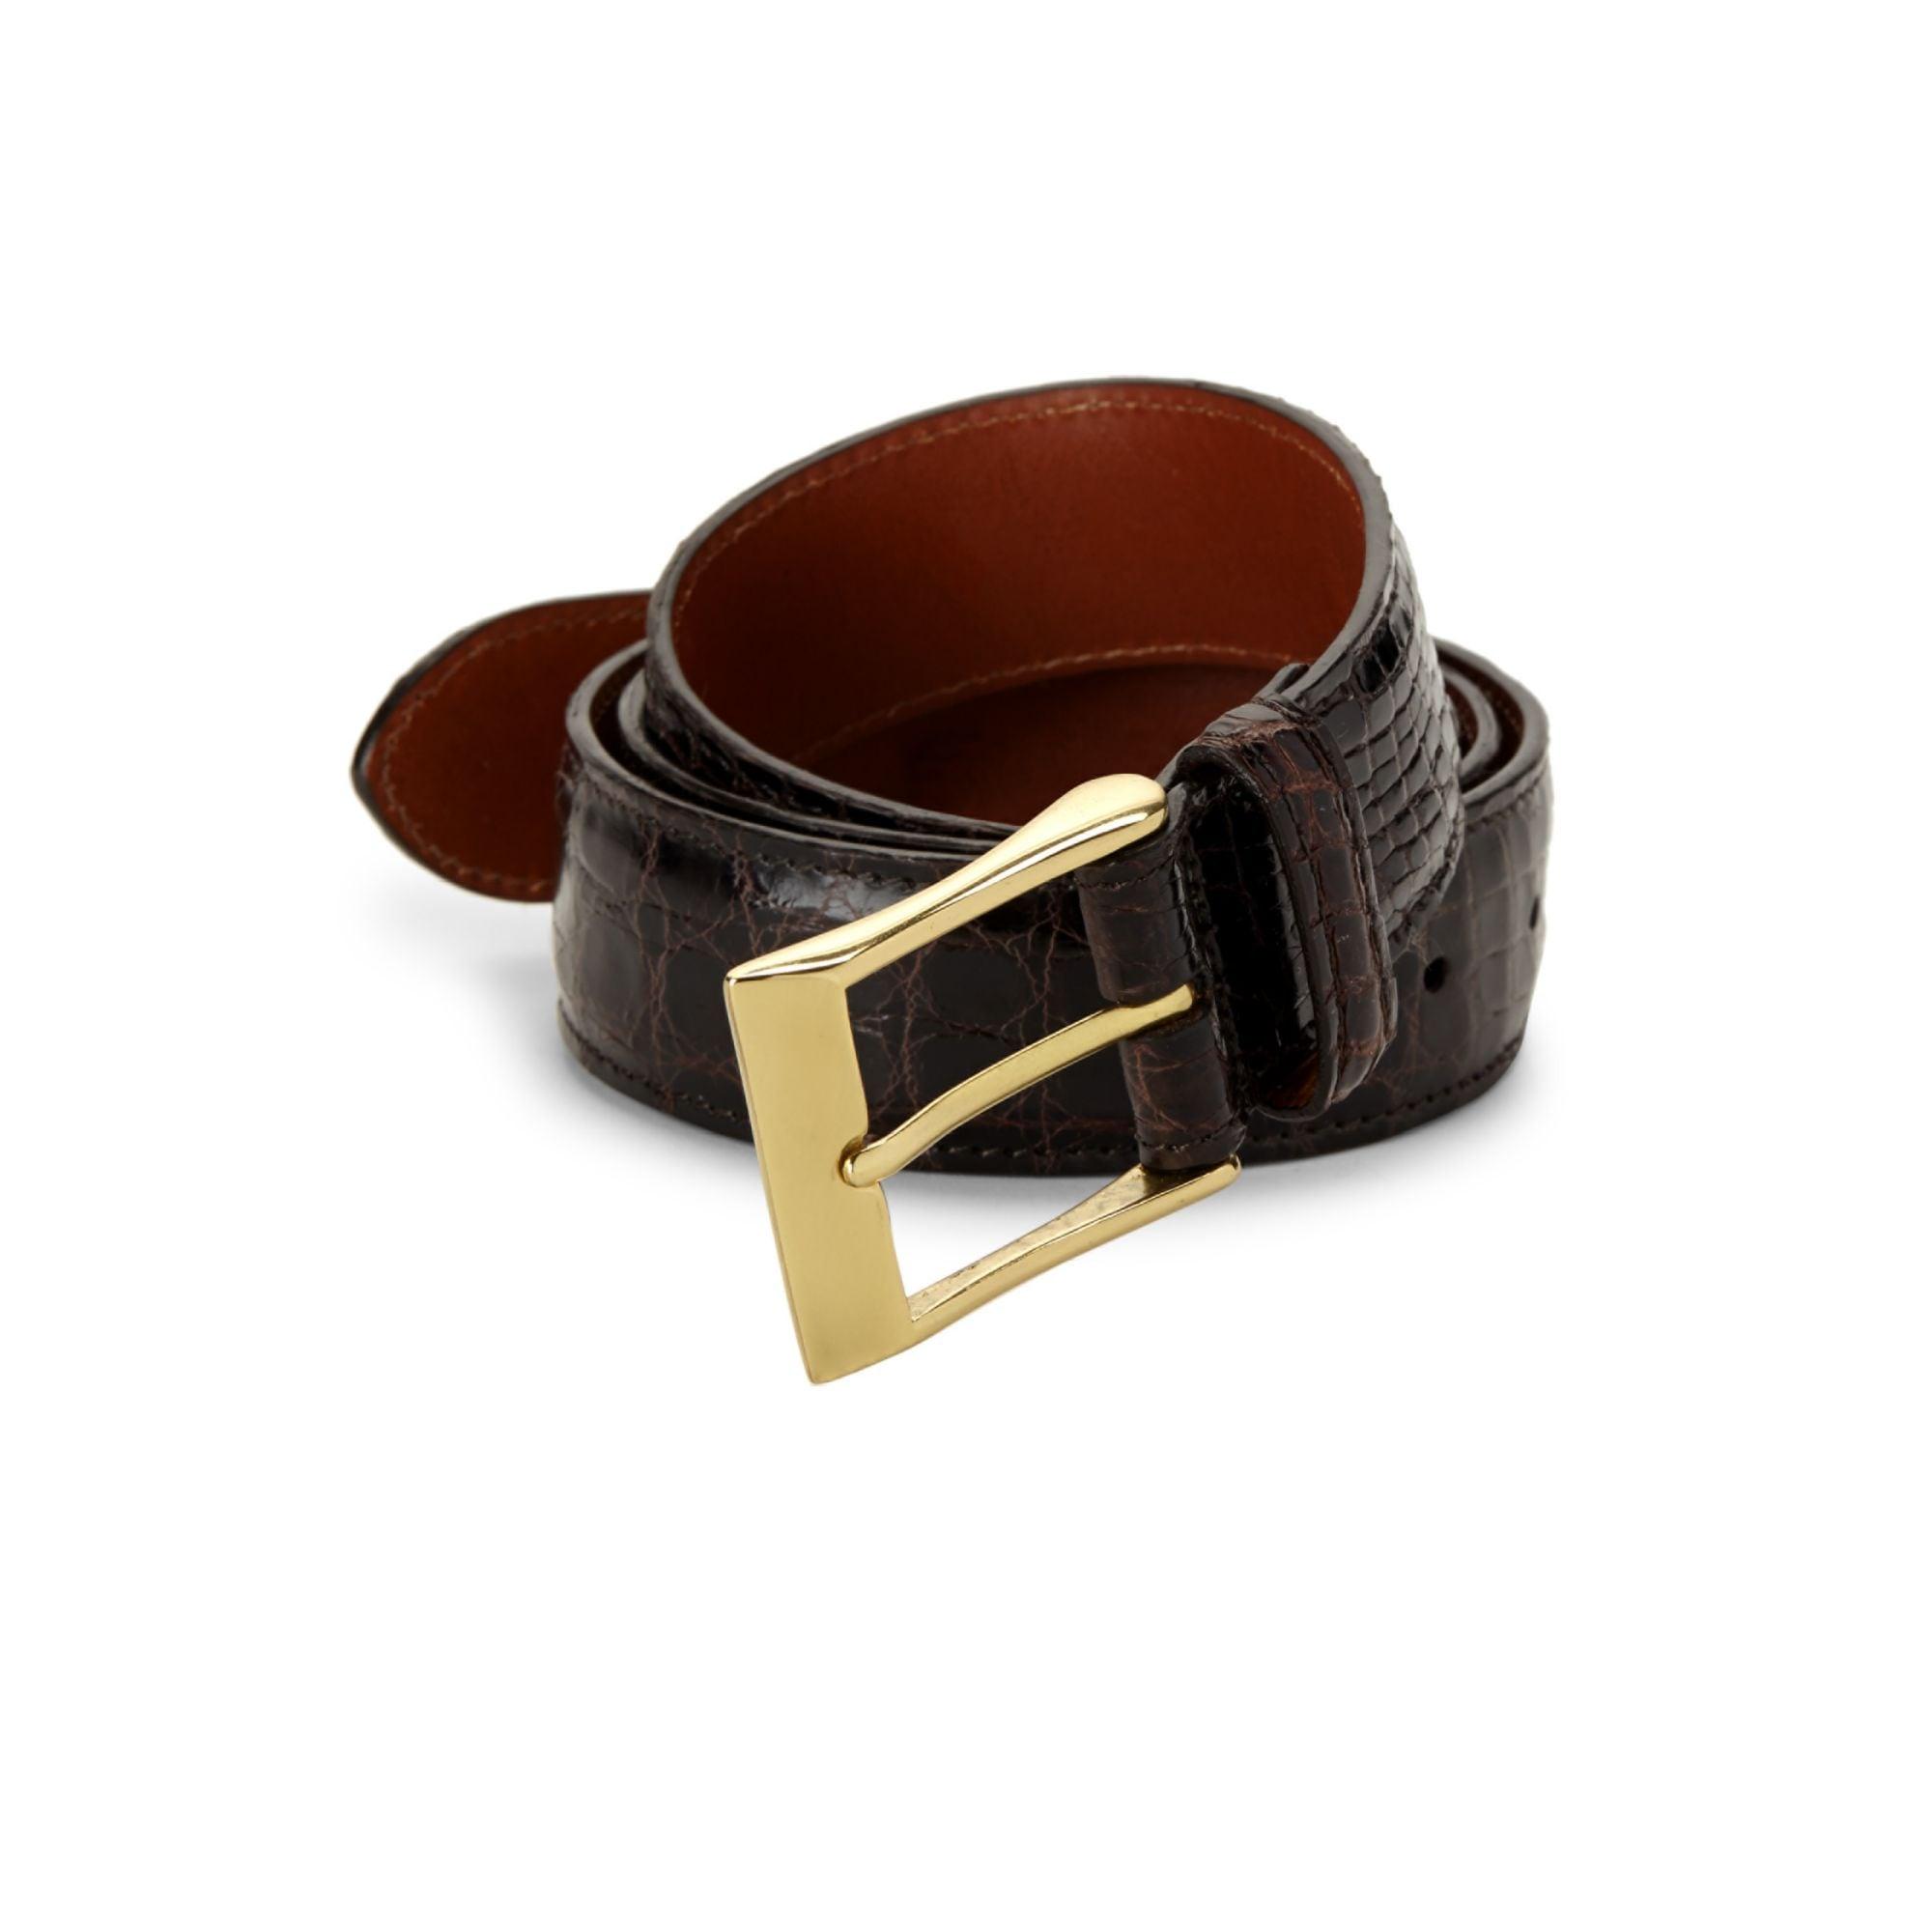 Saks Fifth Avenue Crocodile Leather Belt in Dark Brown (Brown) for Men - Save 29% - Lyst